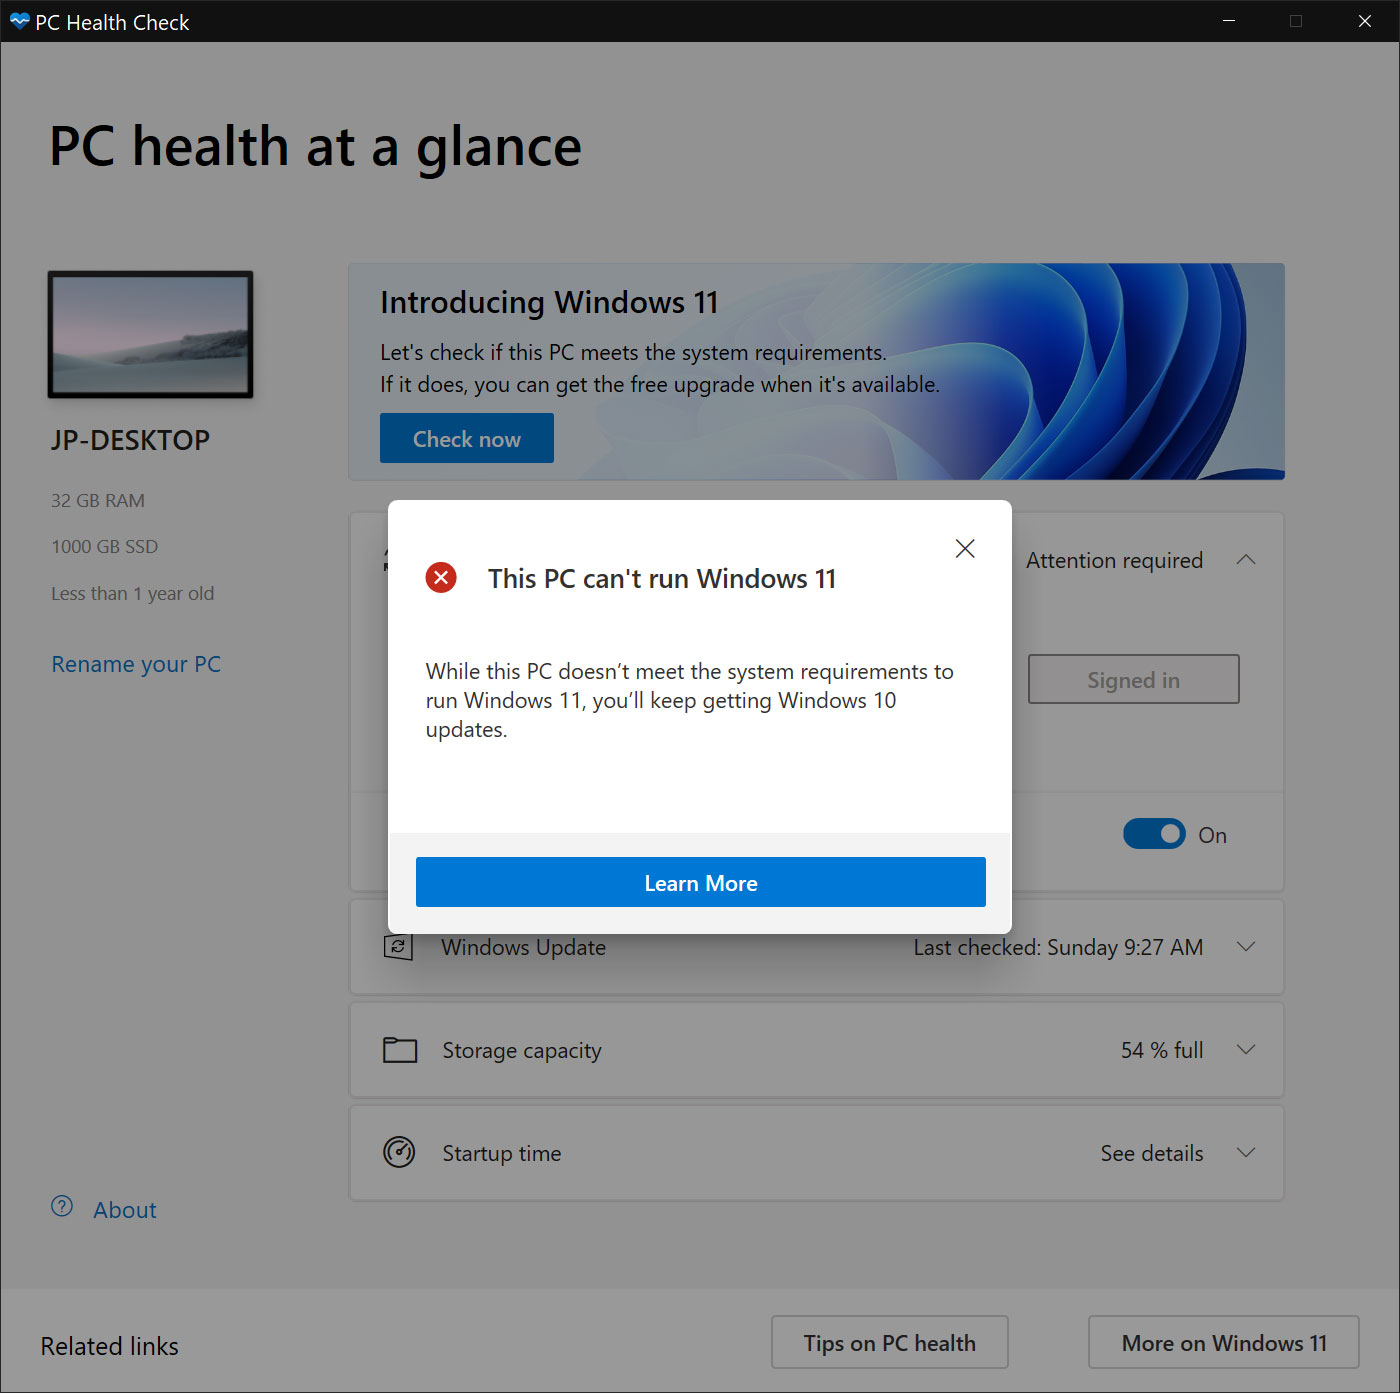 PC Health Check can not run Windows 11